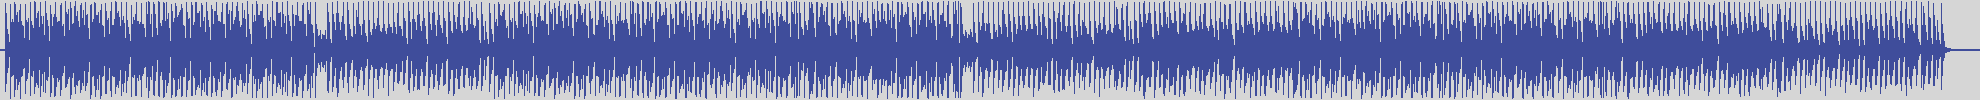 nf_boyz_records [NFY027] New Rhythm - Ligth Fly [Onda House Mix] audio wave form